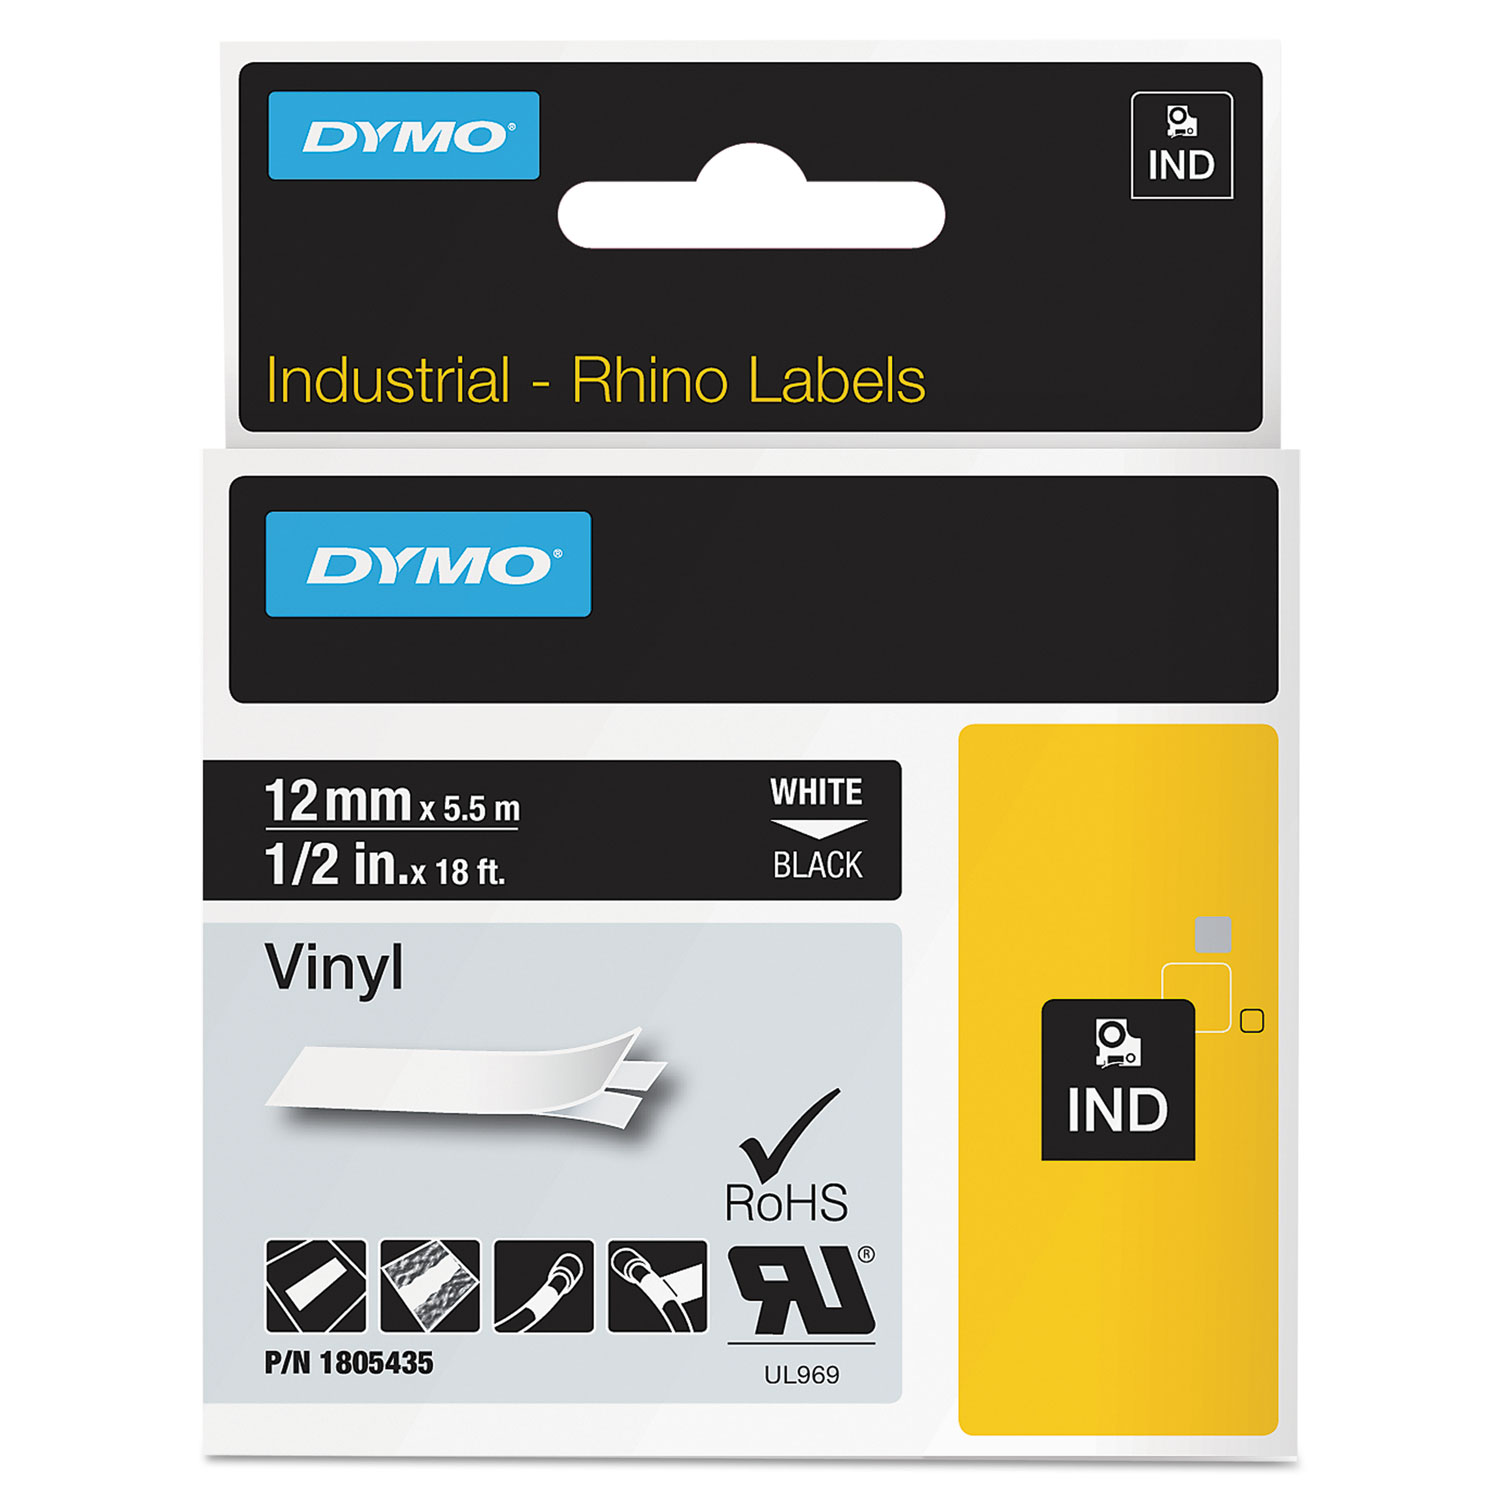  DYMO 1805435 Rhino Permanent Vinyl Industrial Label Tape, 0.5 x 18 ft, Black/White Print (DYM1805435) 